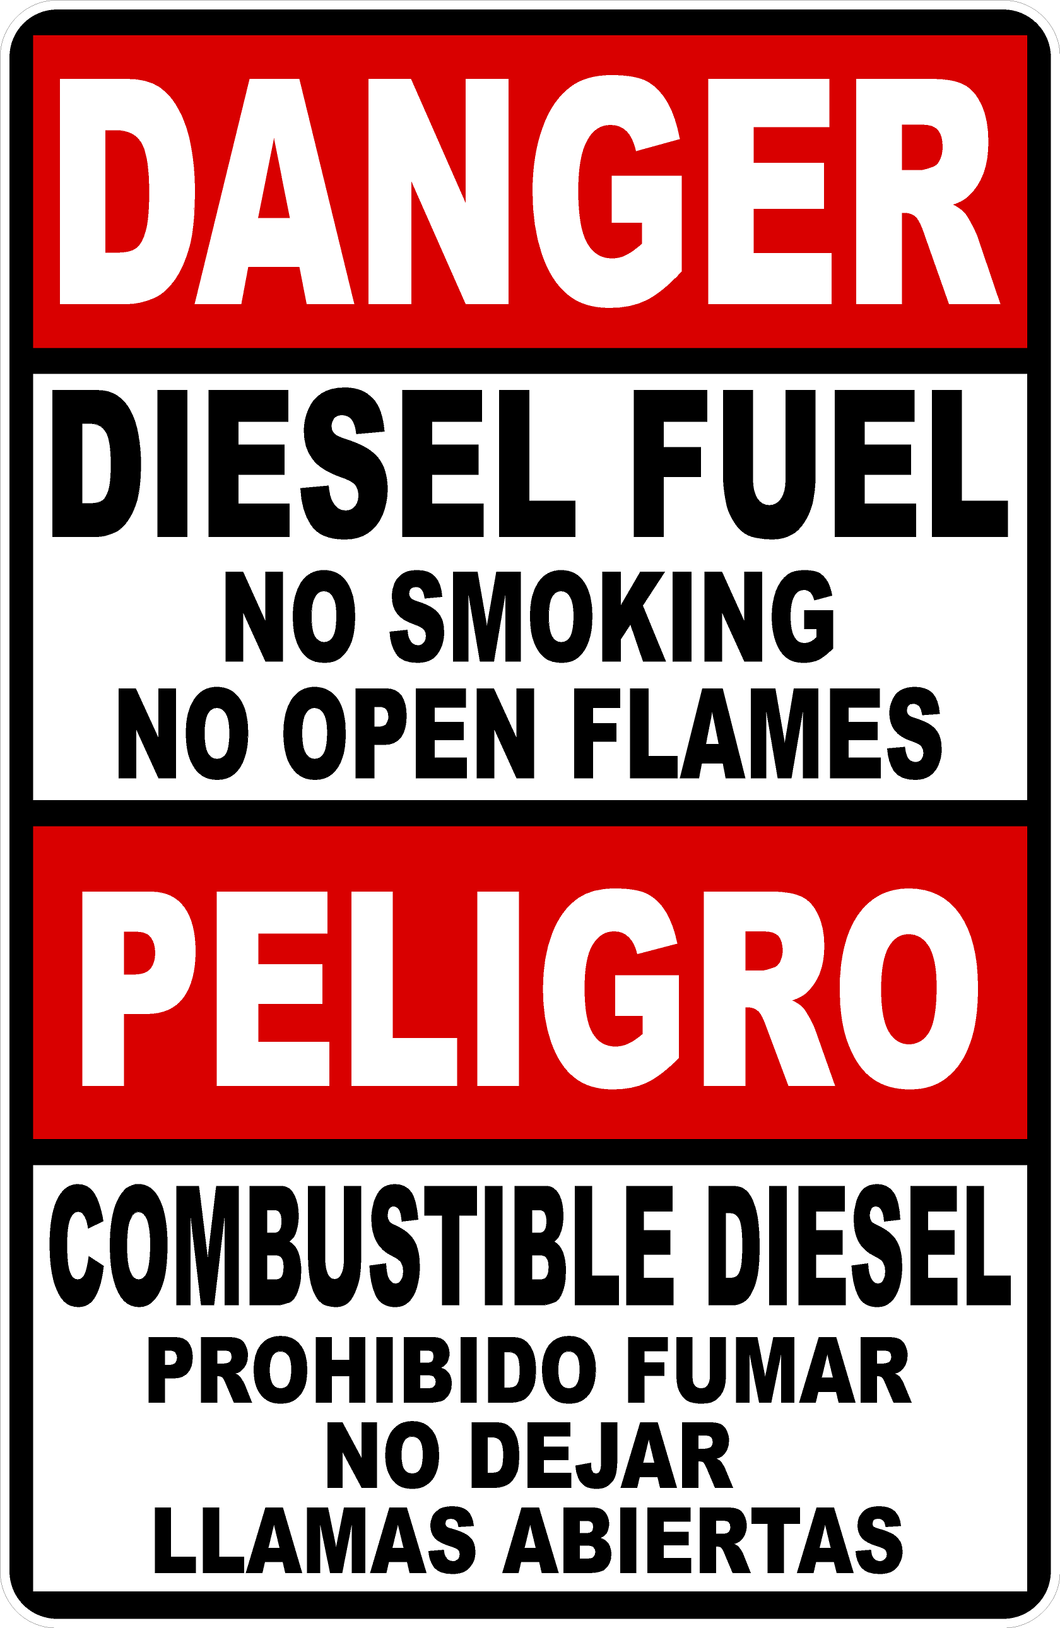 Danger Diesel Fuel No Smoking No Open Flame Bilingual Decal Multi-Pack